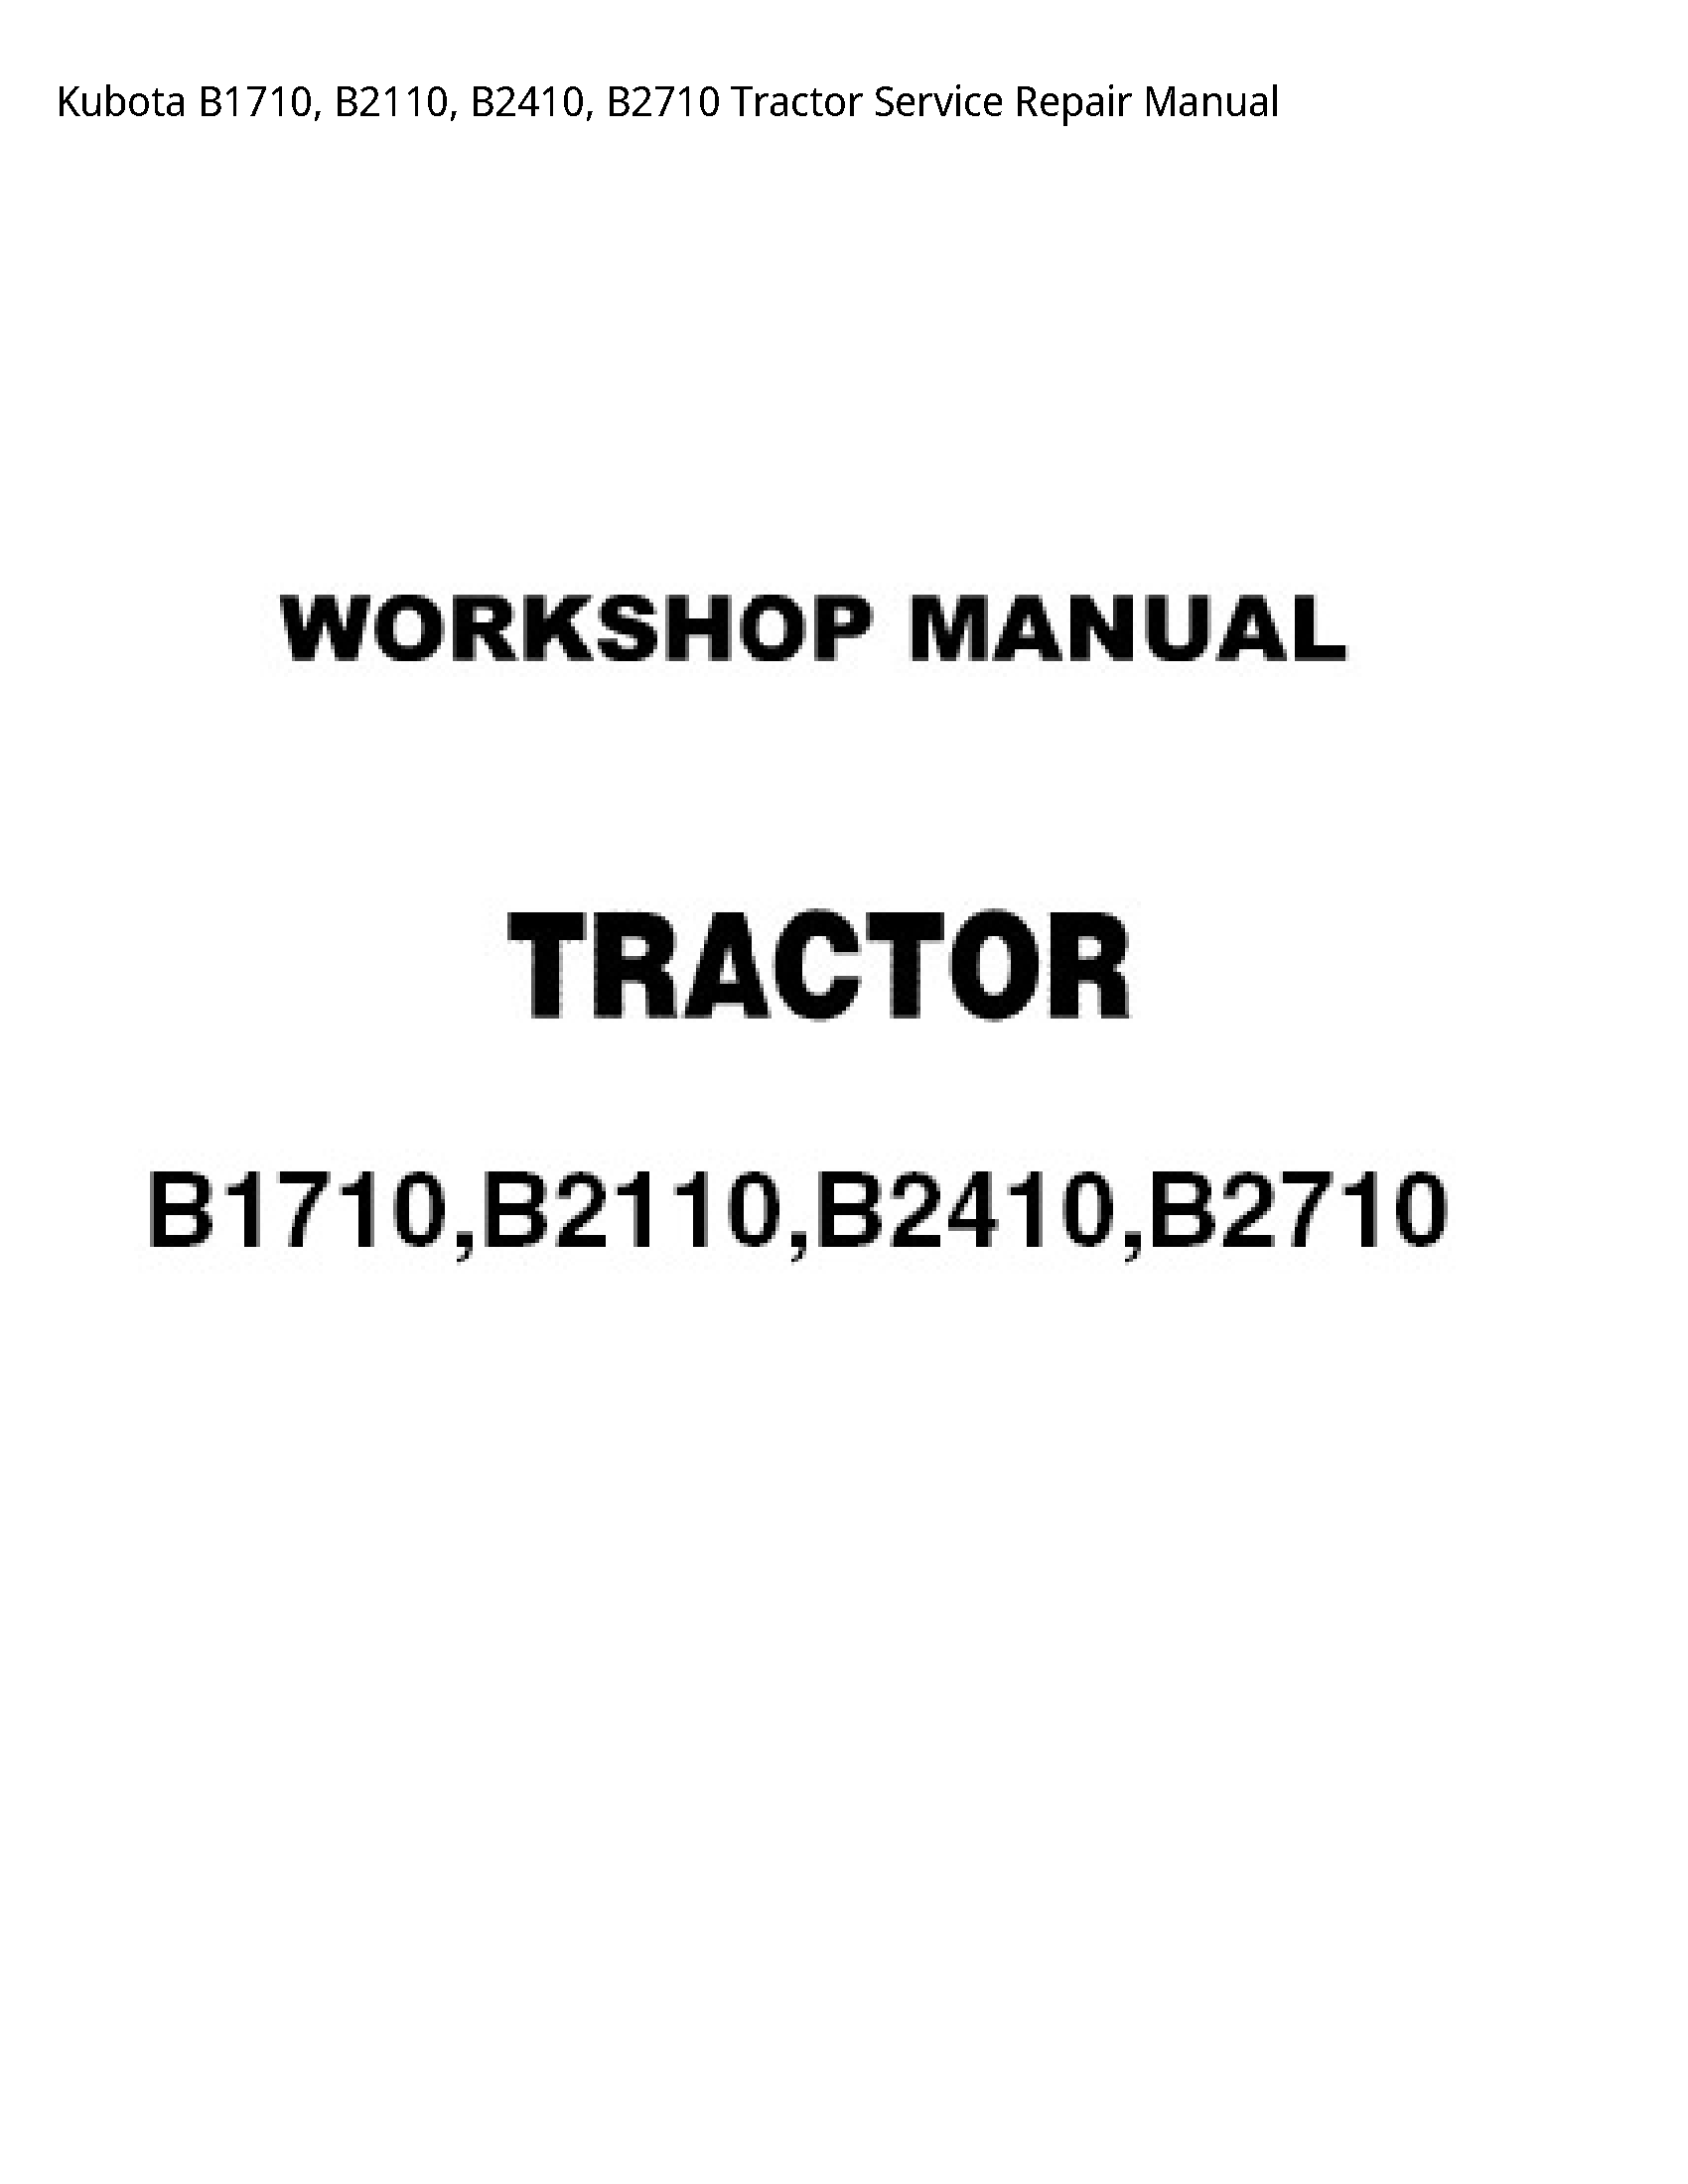 Kubota B1710 Tractor manual